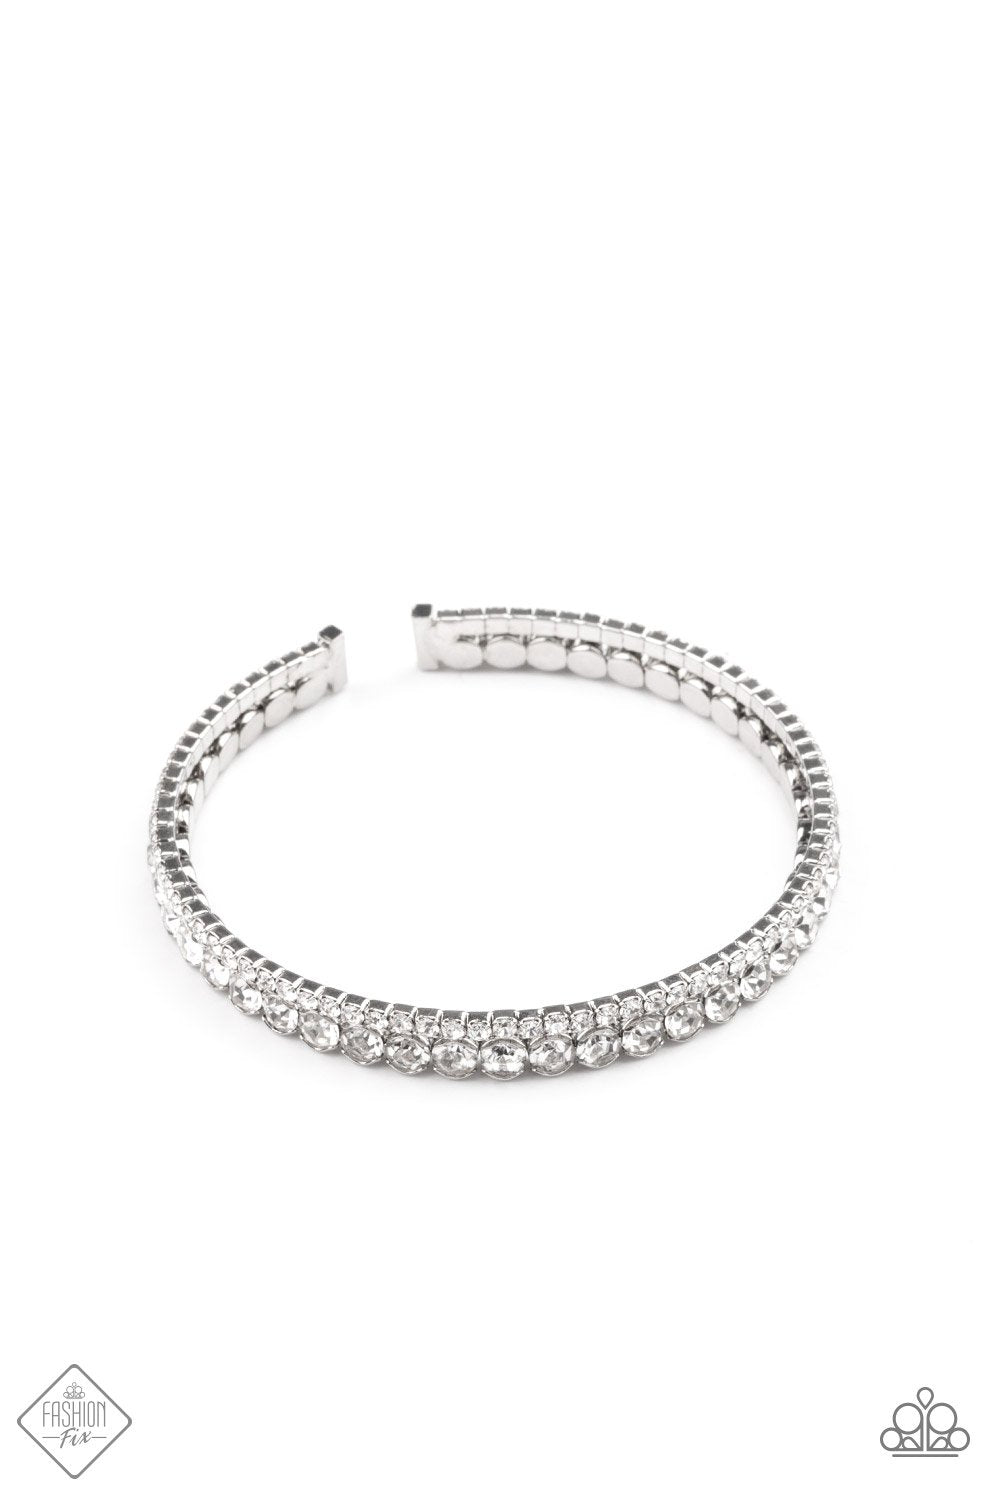 Fairytale Sparkle  -White - May 2021 Paparazzi Fashion Fix Bracelet